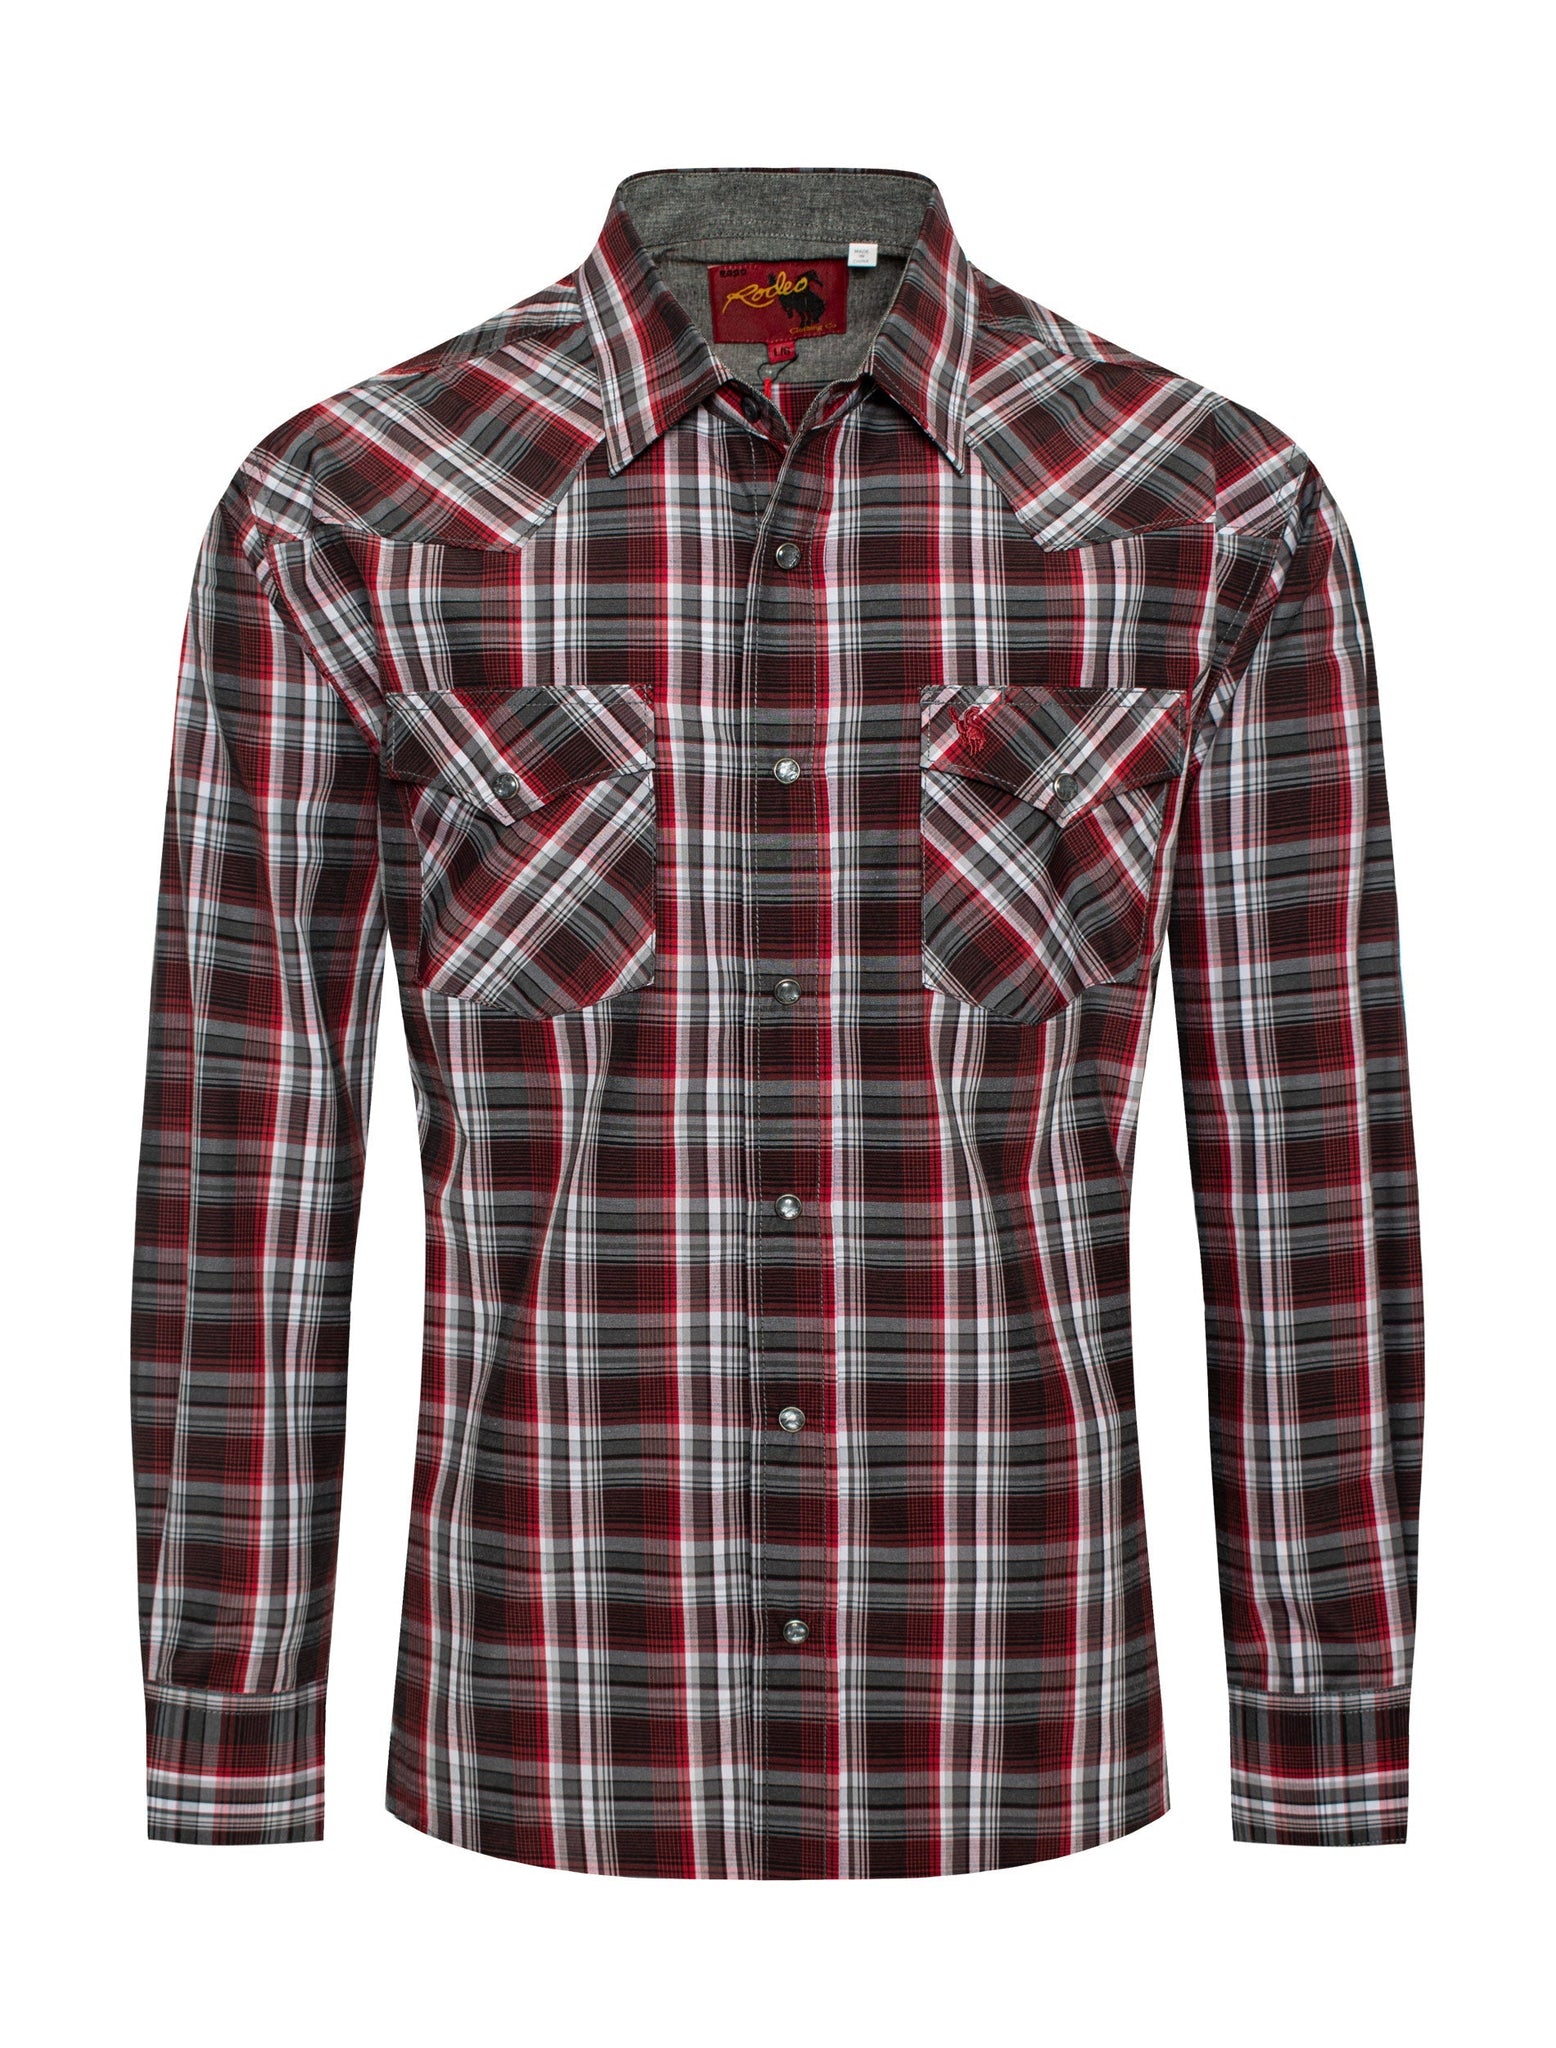 Men's Western Long Sleeve Pearl Snap Plaid Shirt -PS400-477